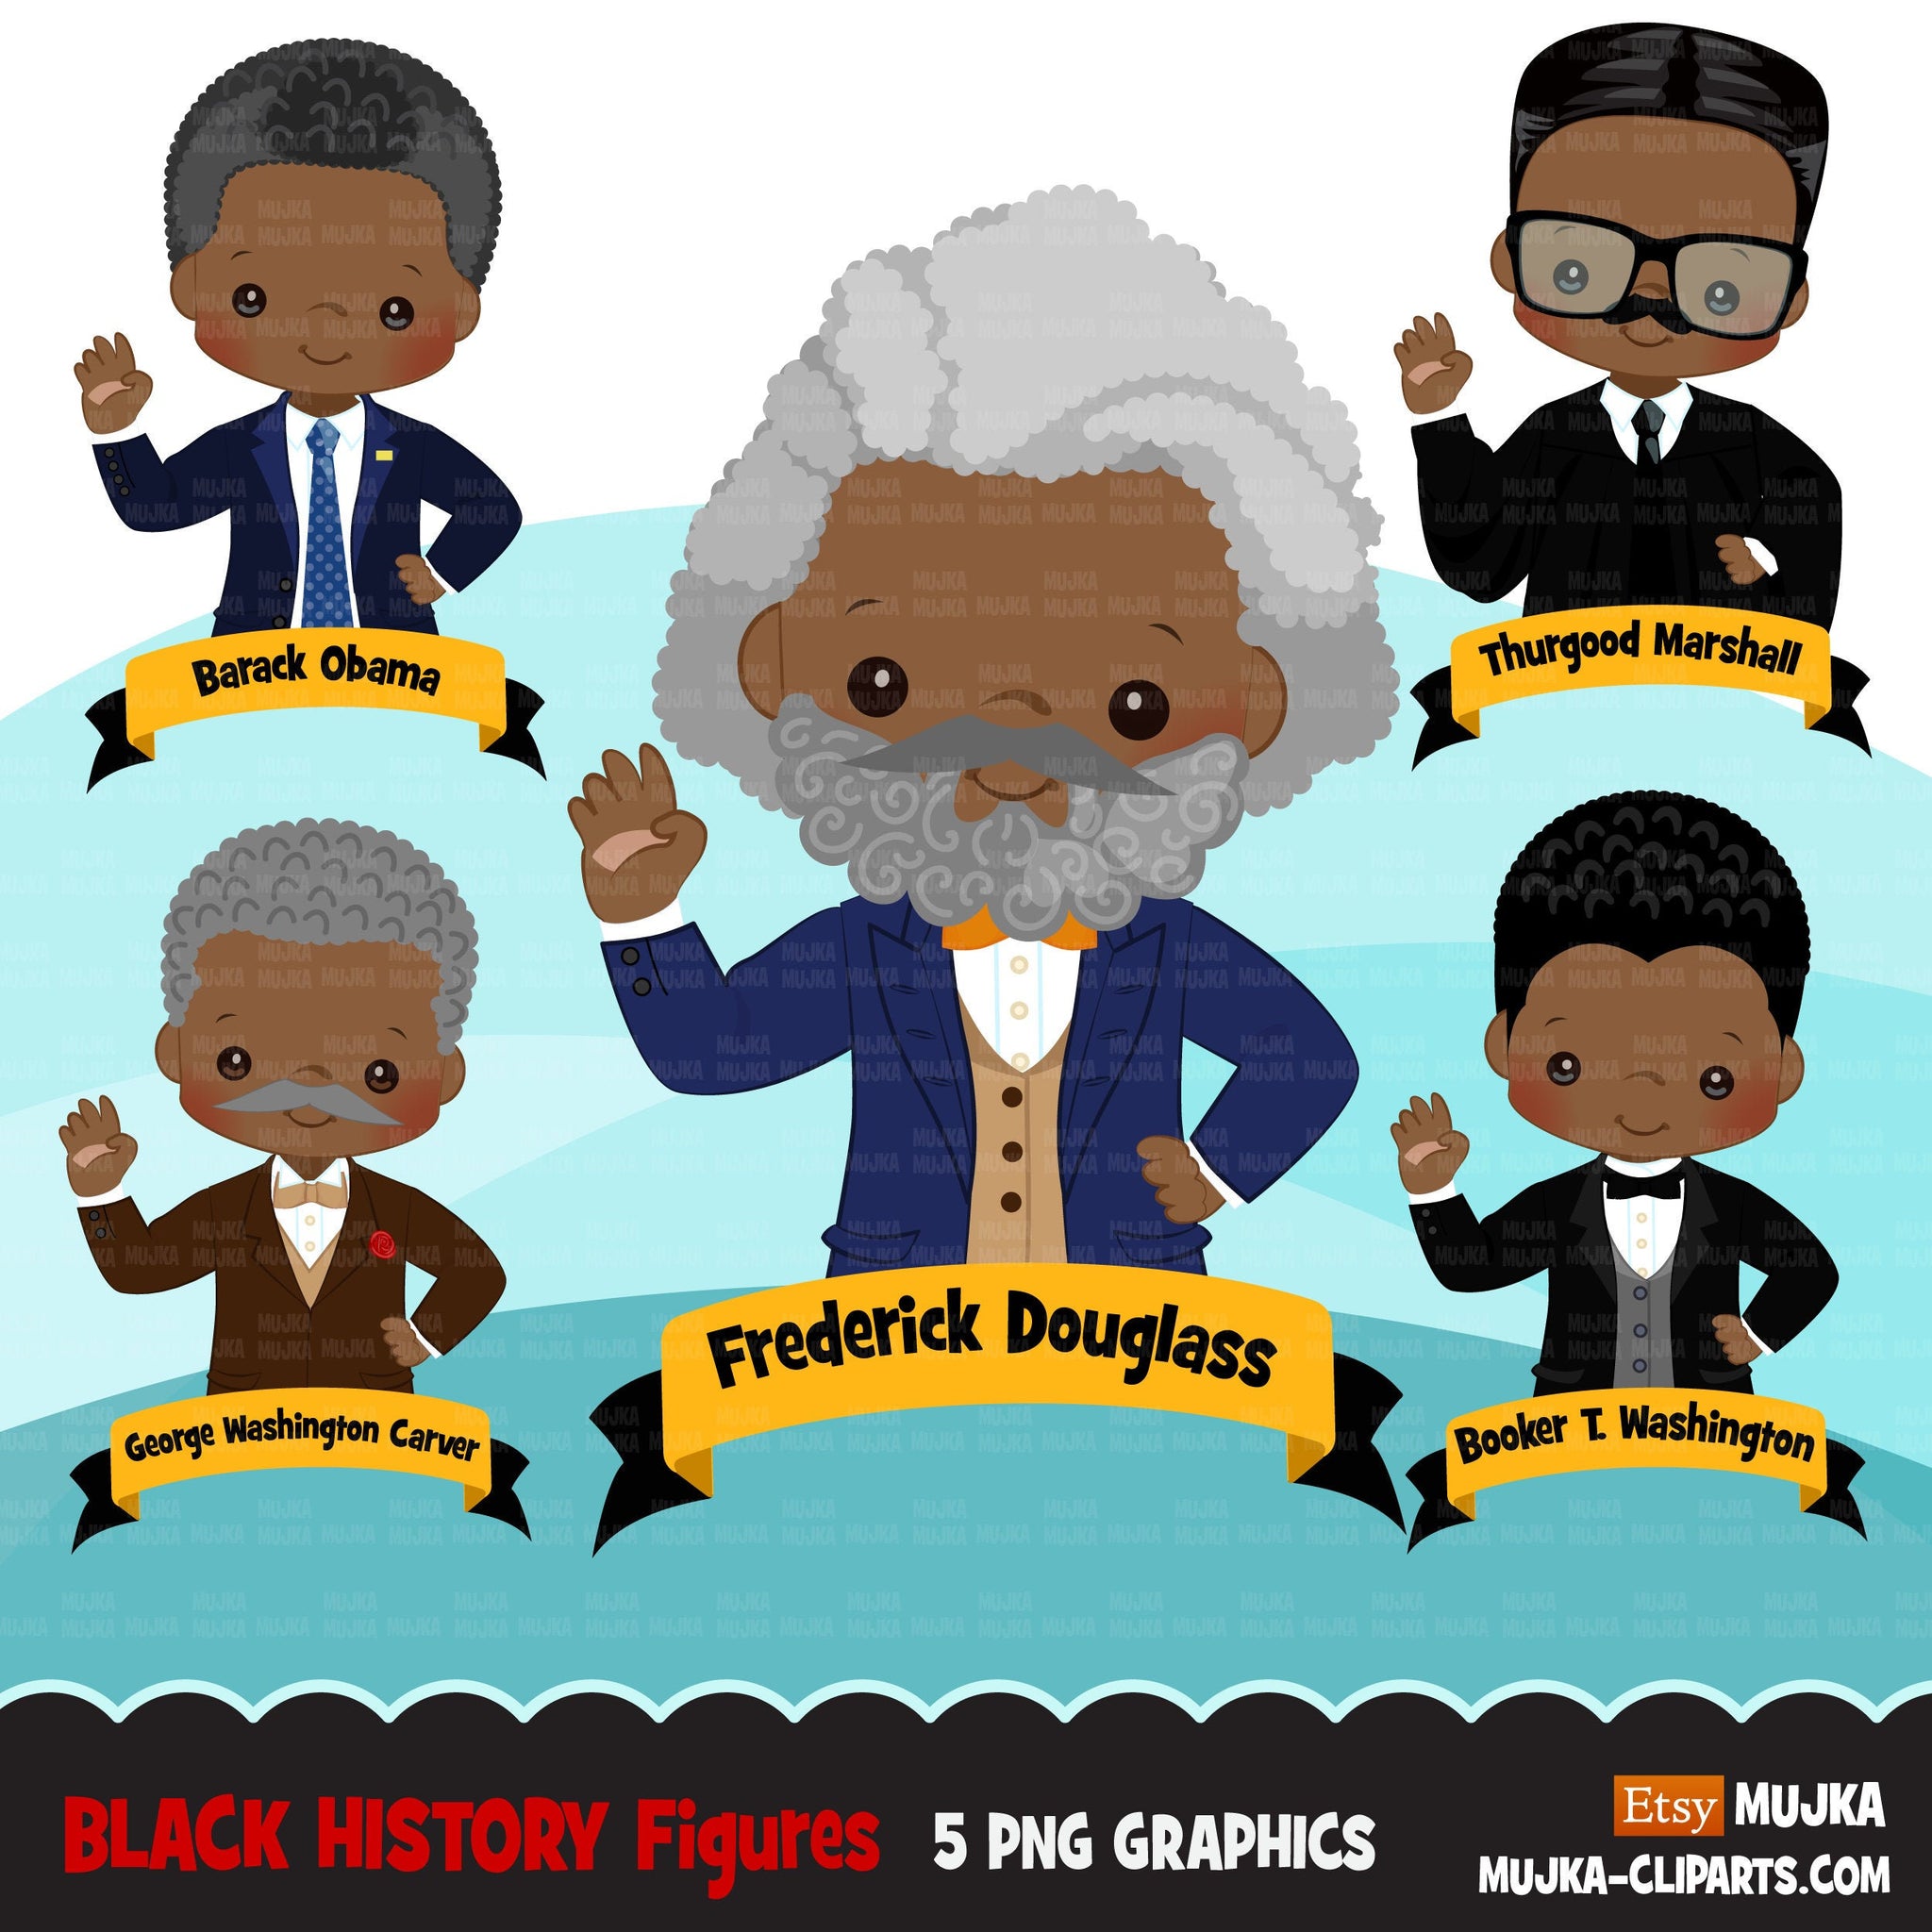 Black history clipart, black history male figures Frederick Douglass, Barack Obama, George Washington Carver, Thurgood Marshall clip art PNG